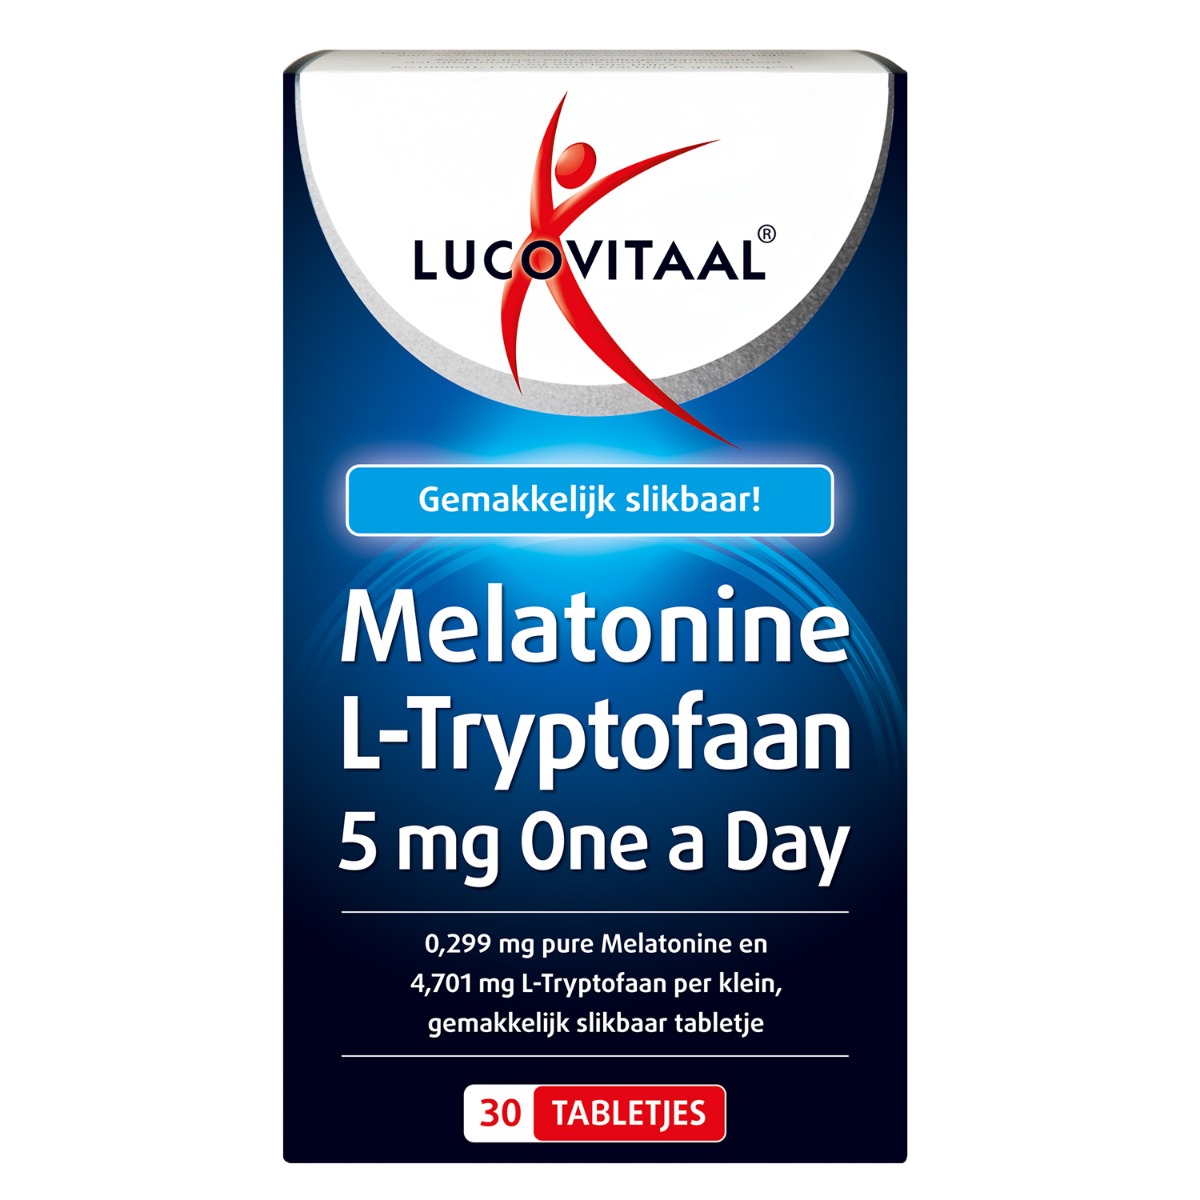 Melatonine L-Tryptofaan 5 mg 30 tabletten - Lucovitaal